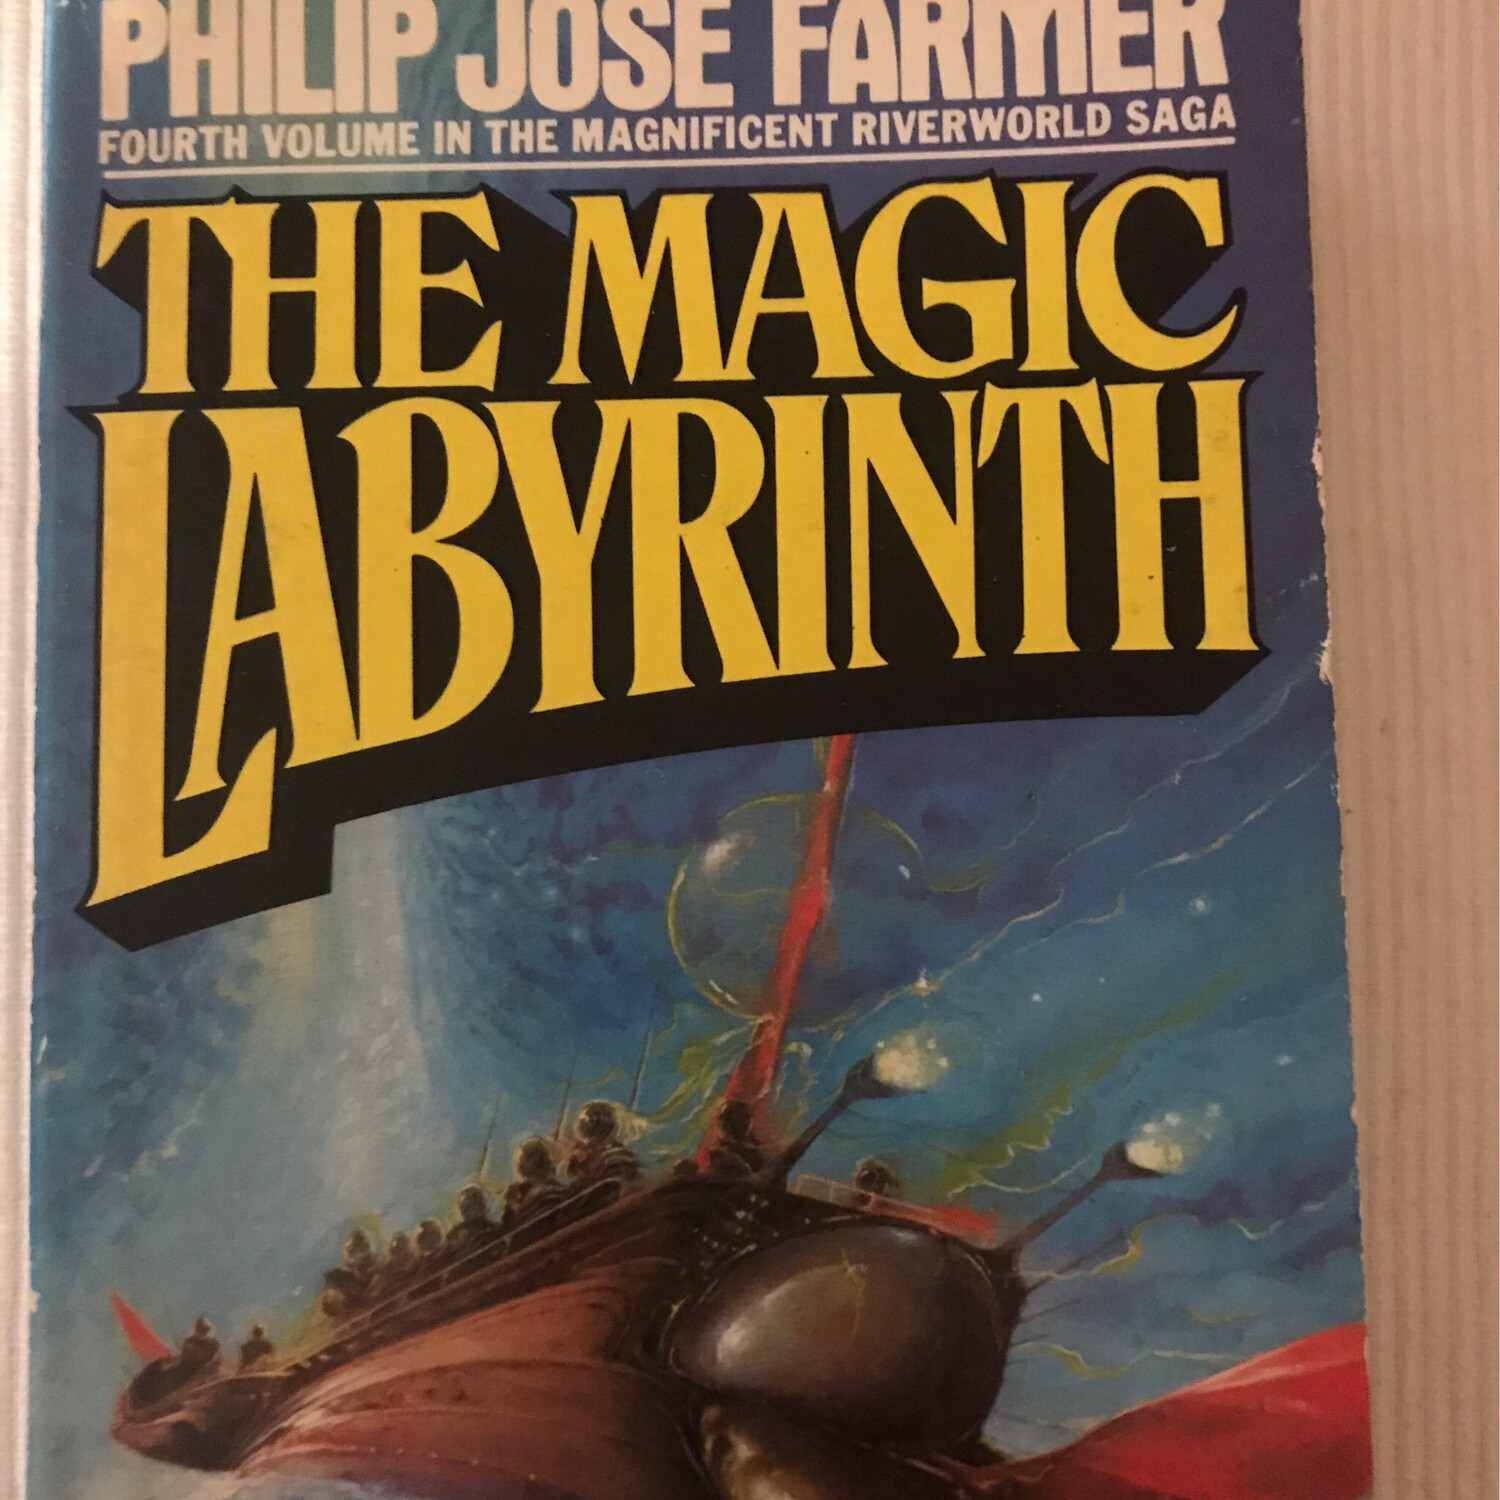 The Magic Labyrinth, Philip Jose’ Farmer